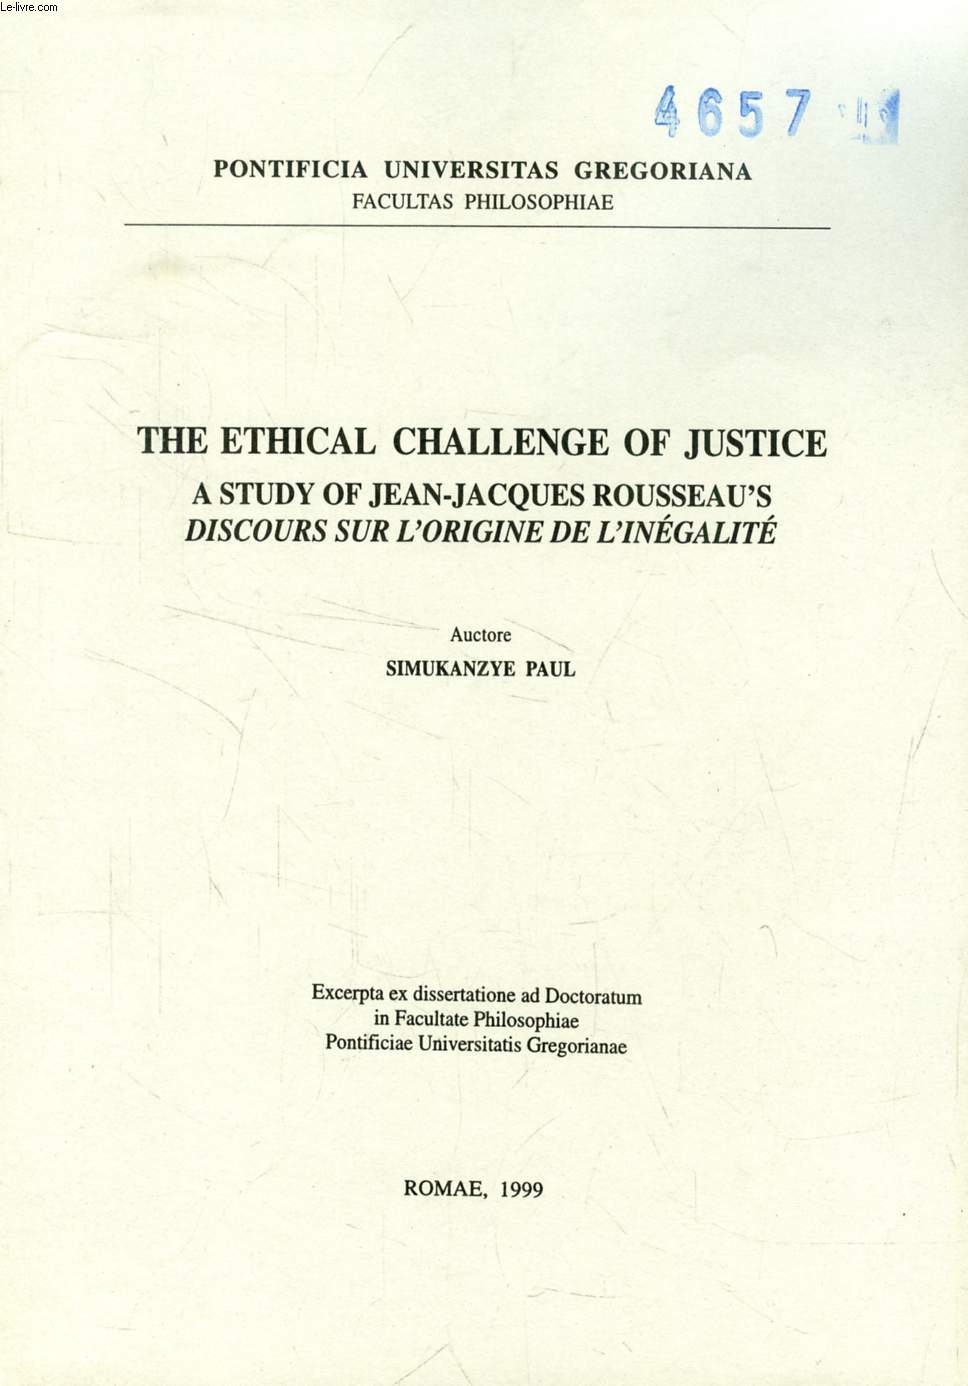 THE ETHICAL CHALLENGE OF JUSTICE, A STUDY OF JEAN-JACQUES ROUSSEAU'S 'DISCOURS SUR L'ORIGINE DE L'INEGALITE' (EXCERPTA EX DISSERTATIONE)